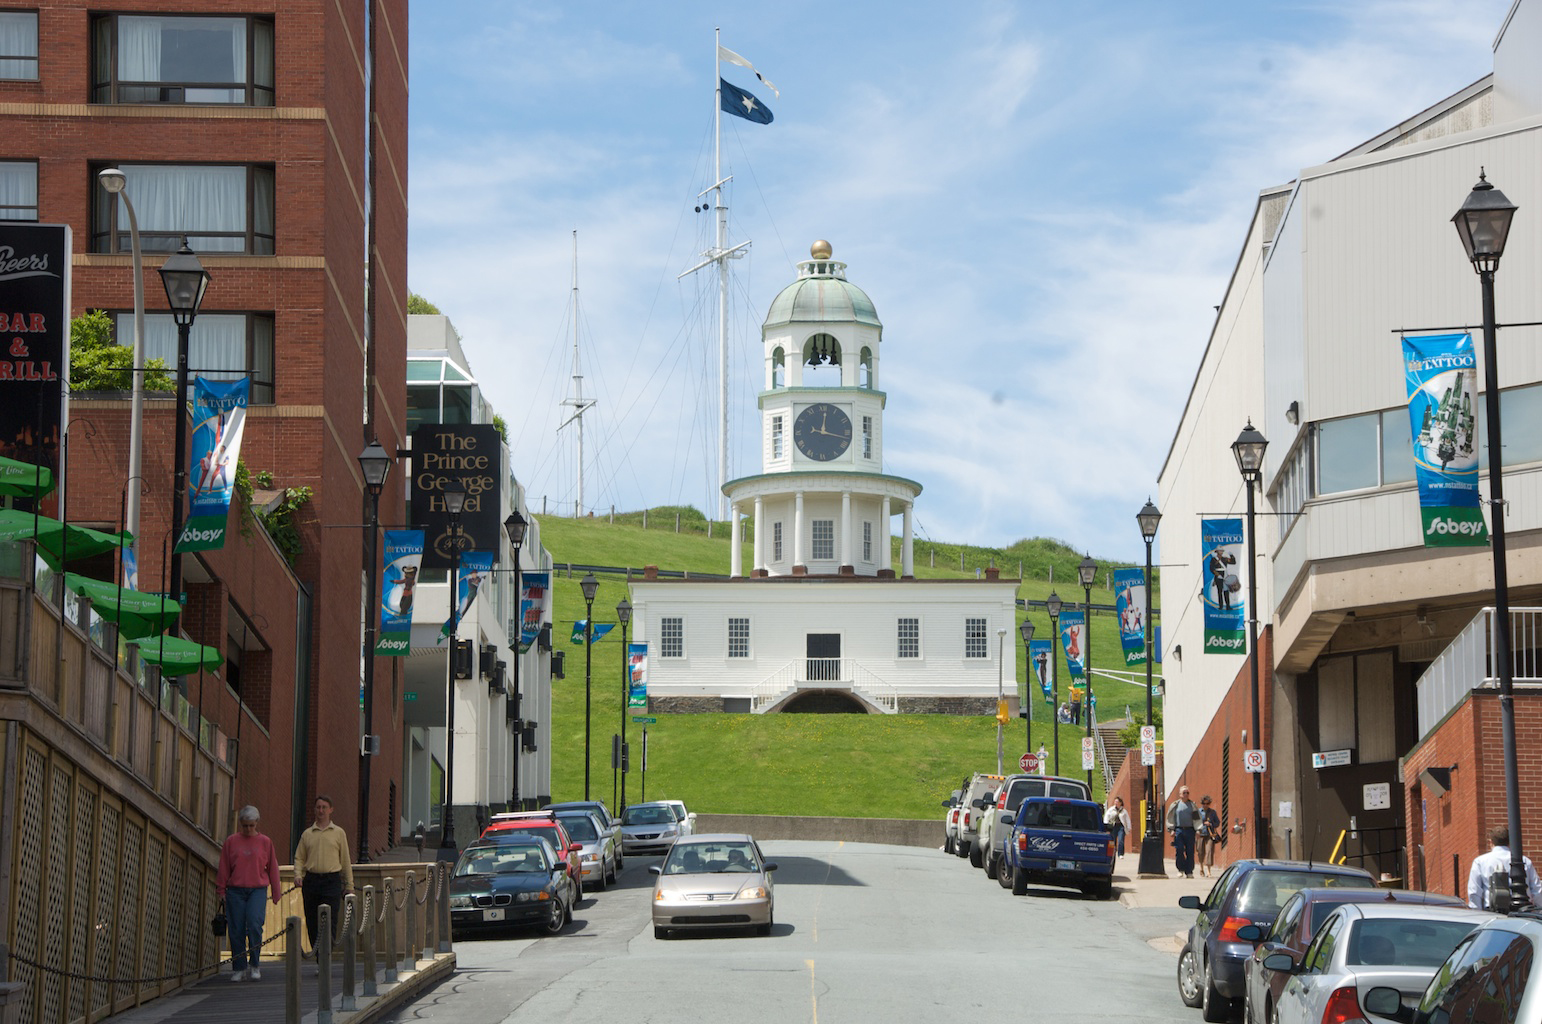 Relógio da cidade de Halifax na base da Citadel Hill, Prince George Hotel